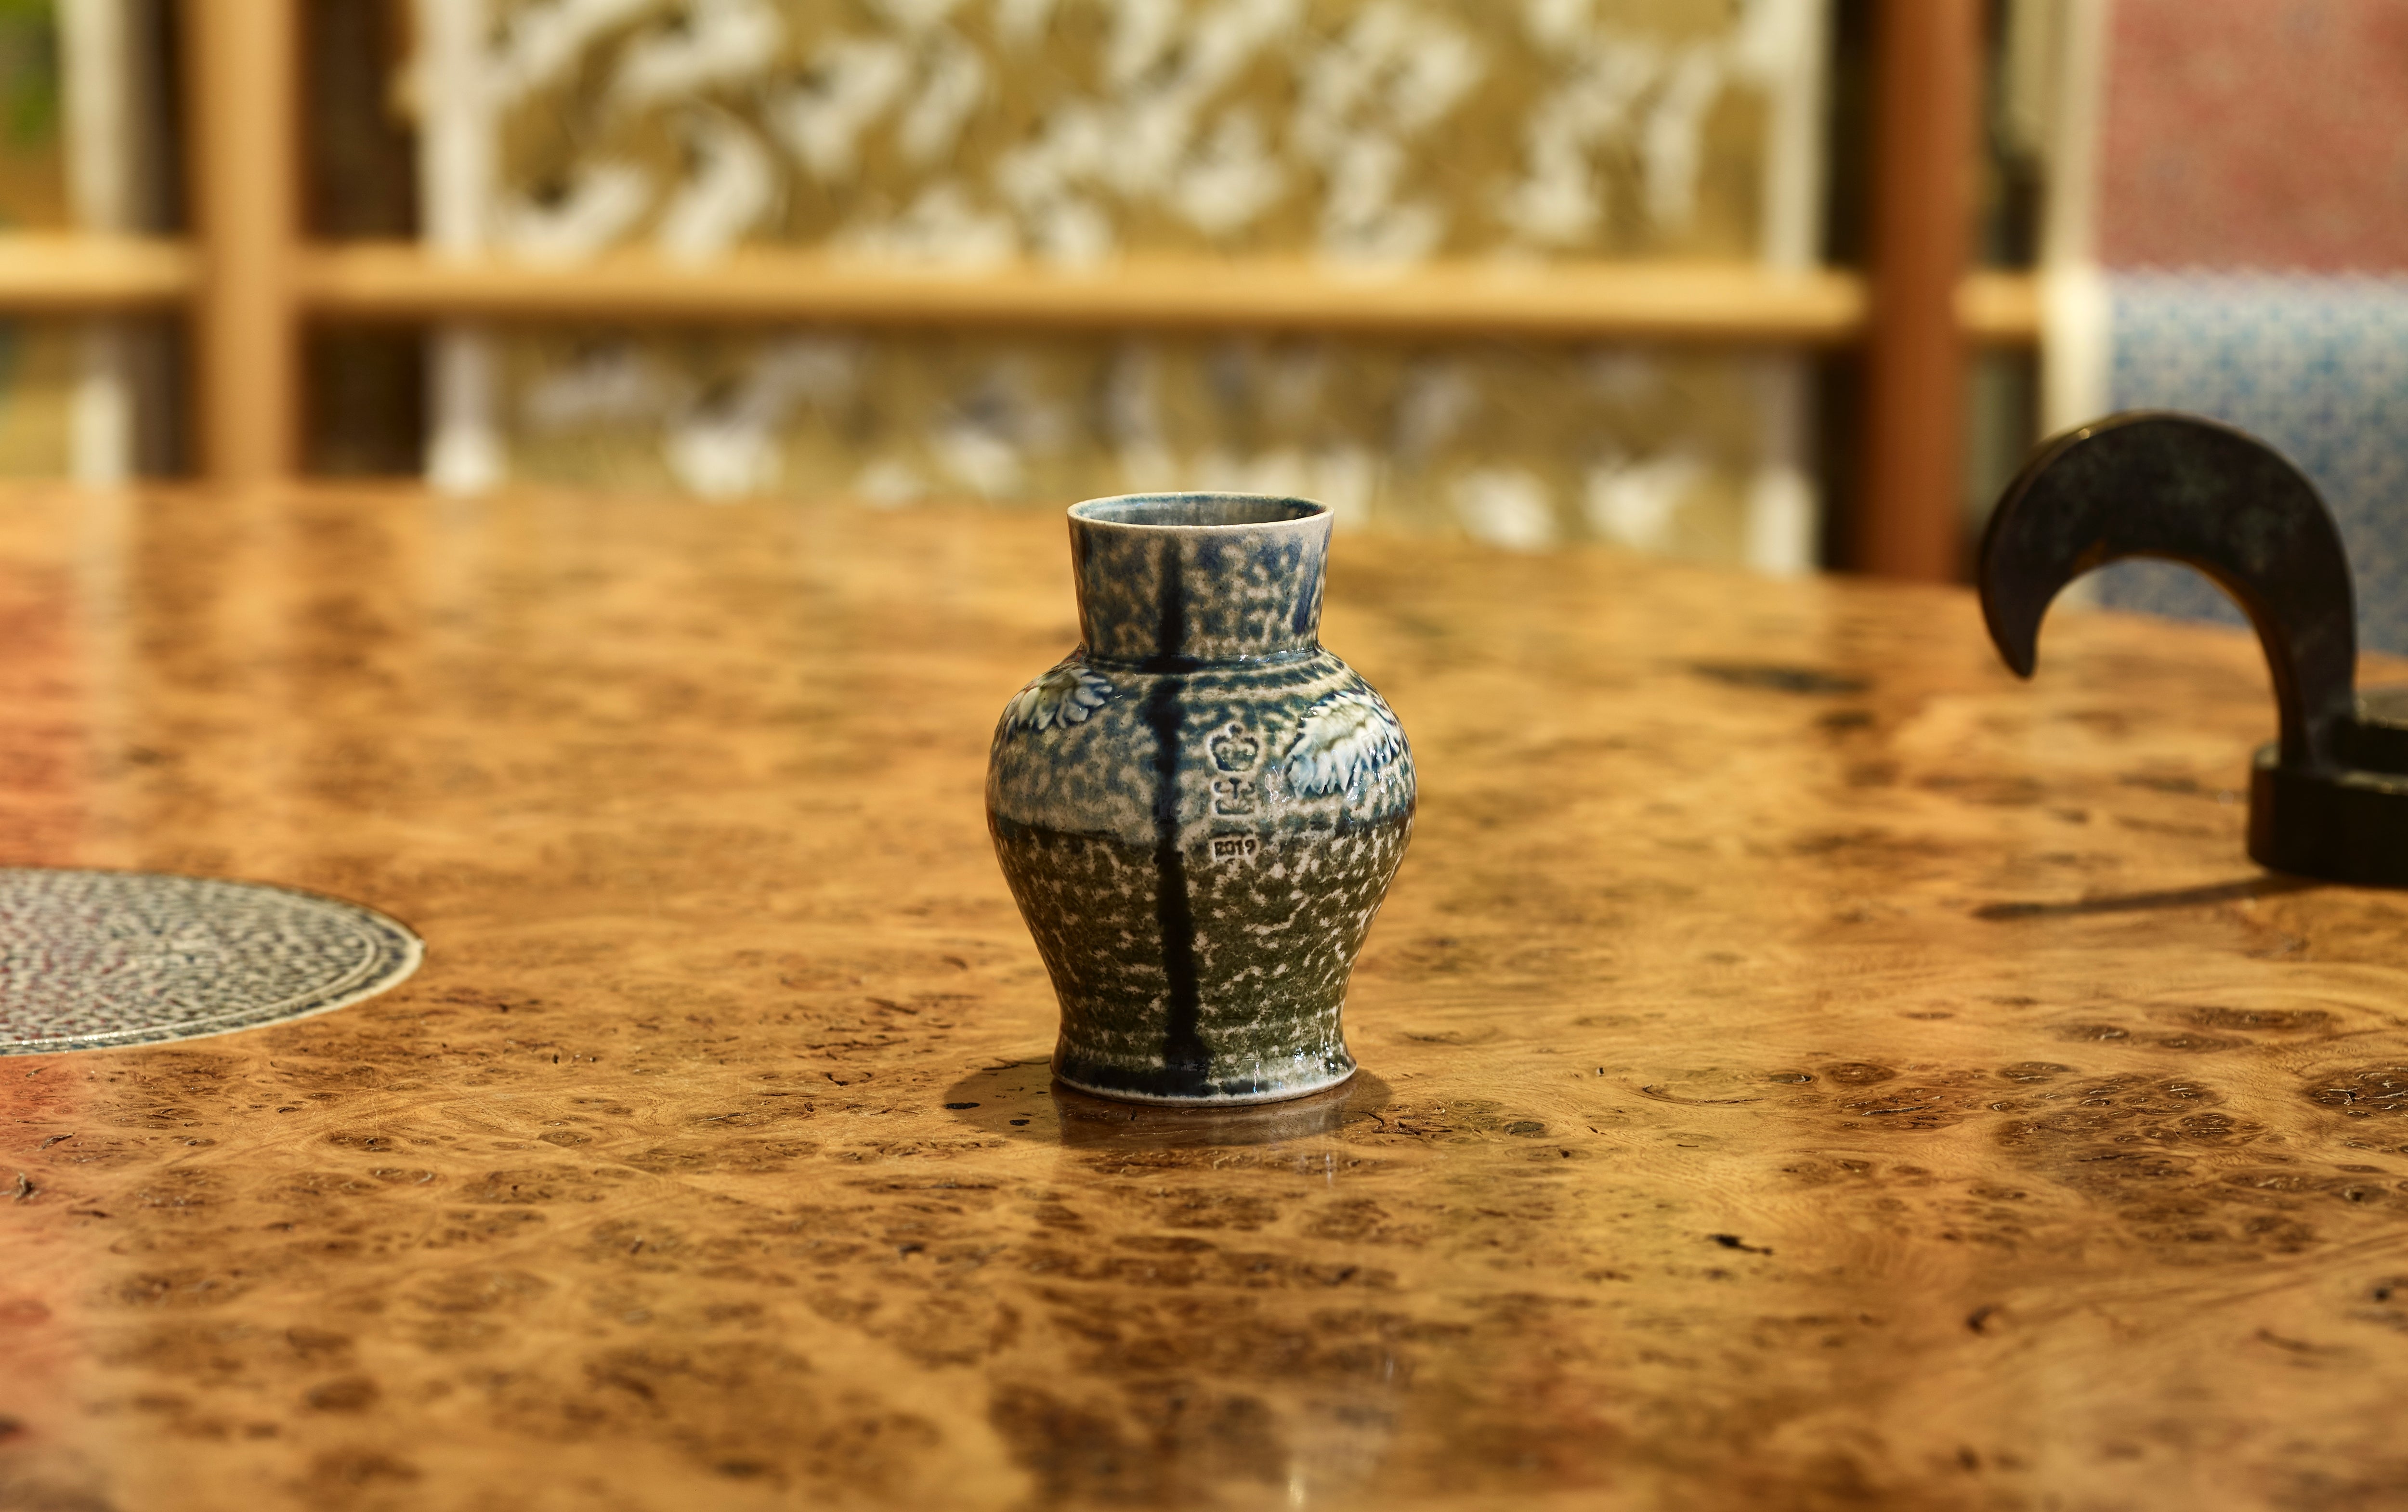 Steve Harrison Ceramic Vase, No.23 Yellow and Blue Stoneware